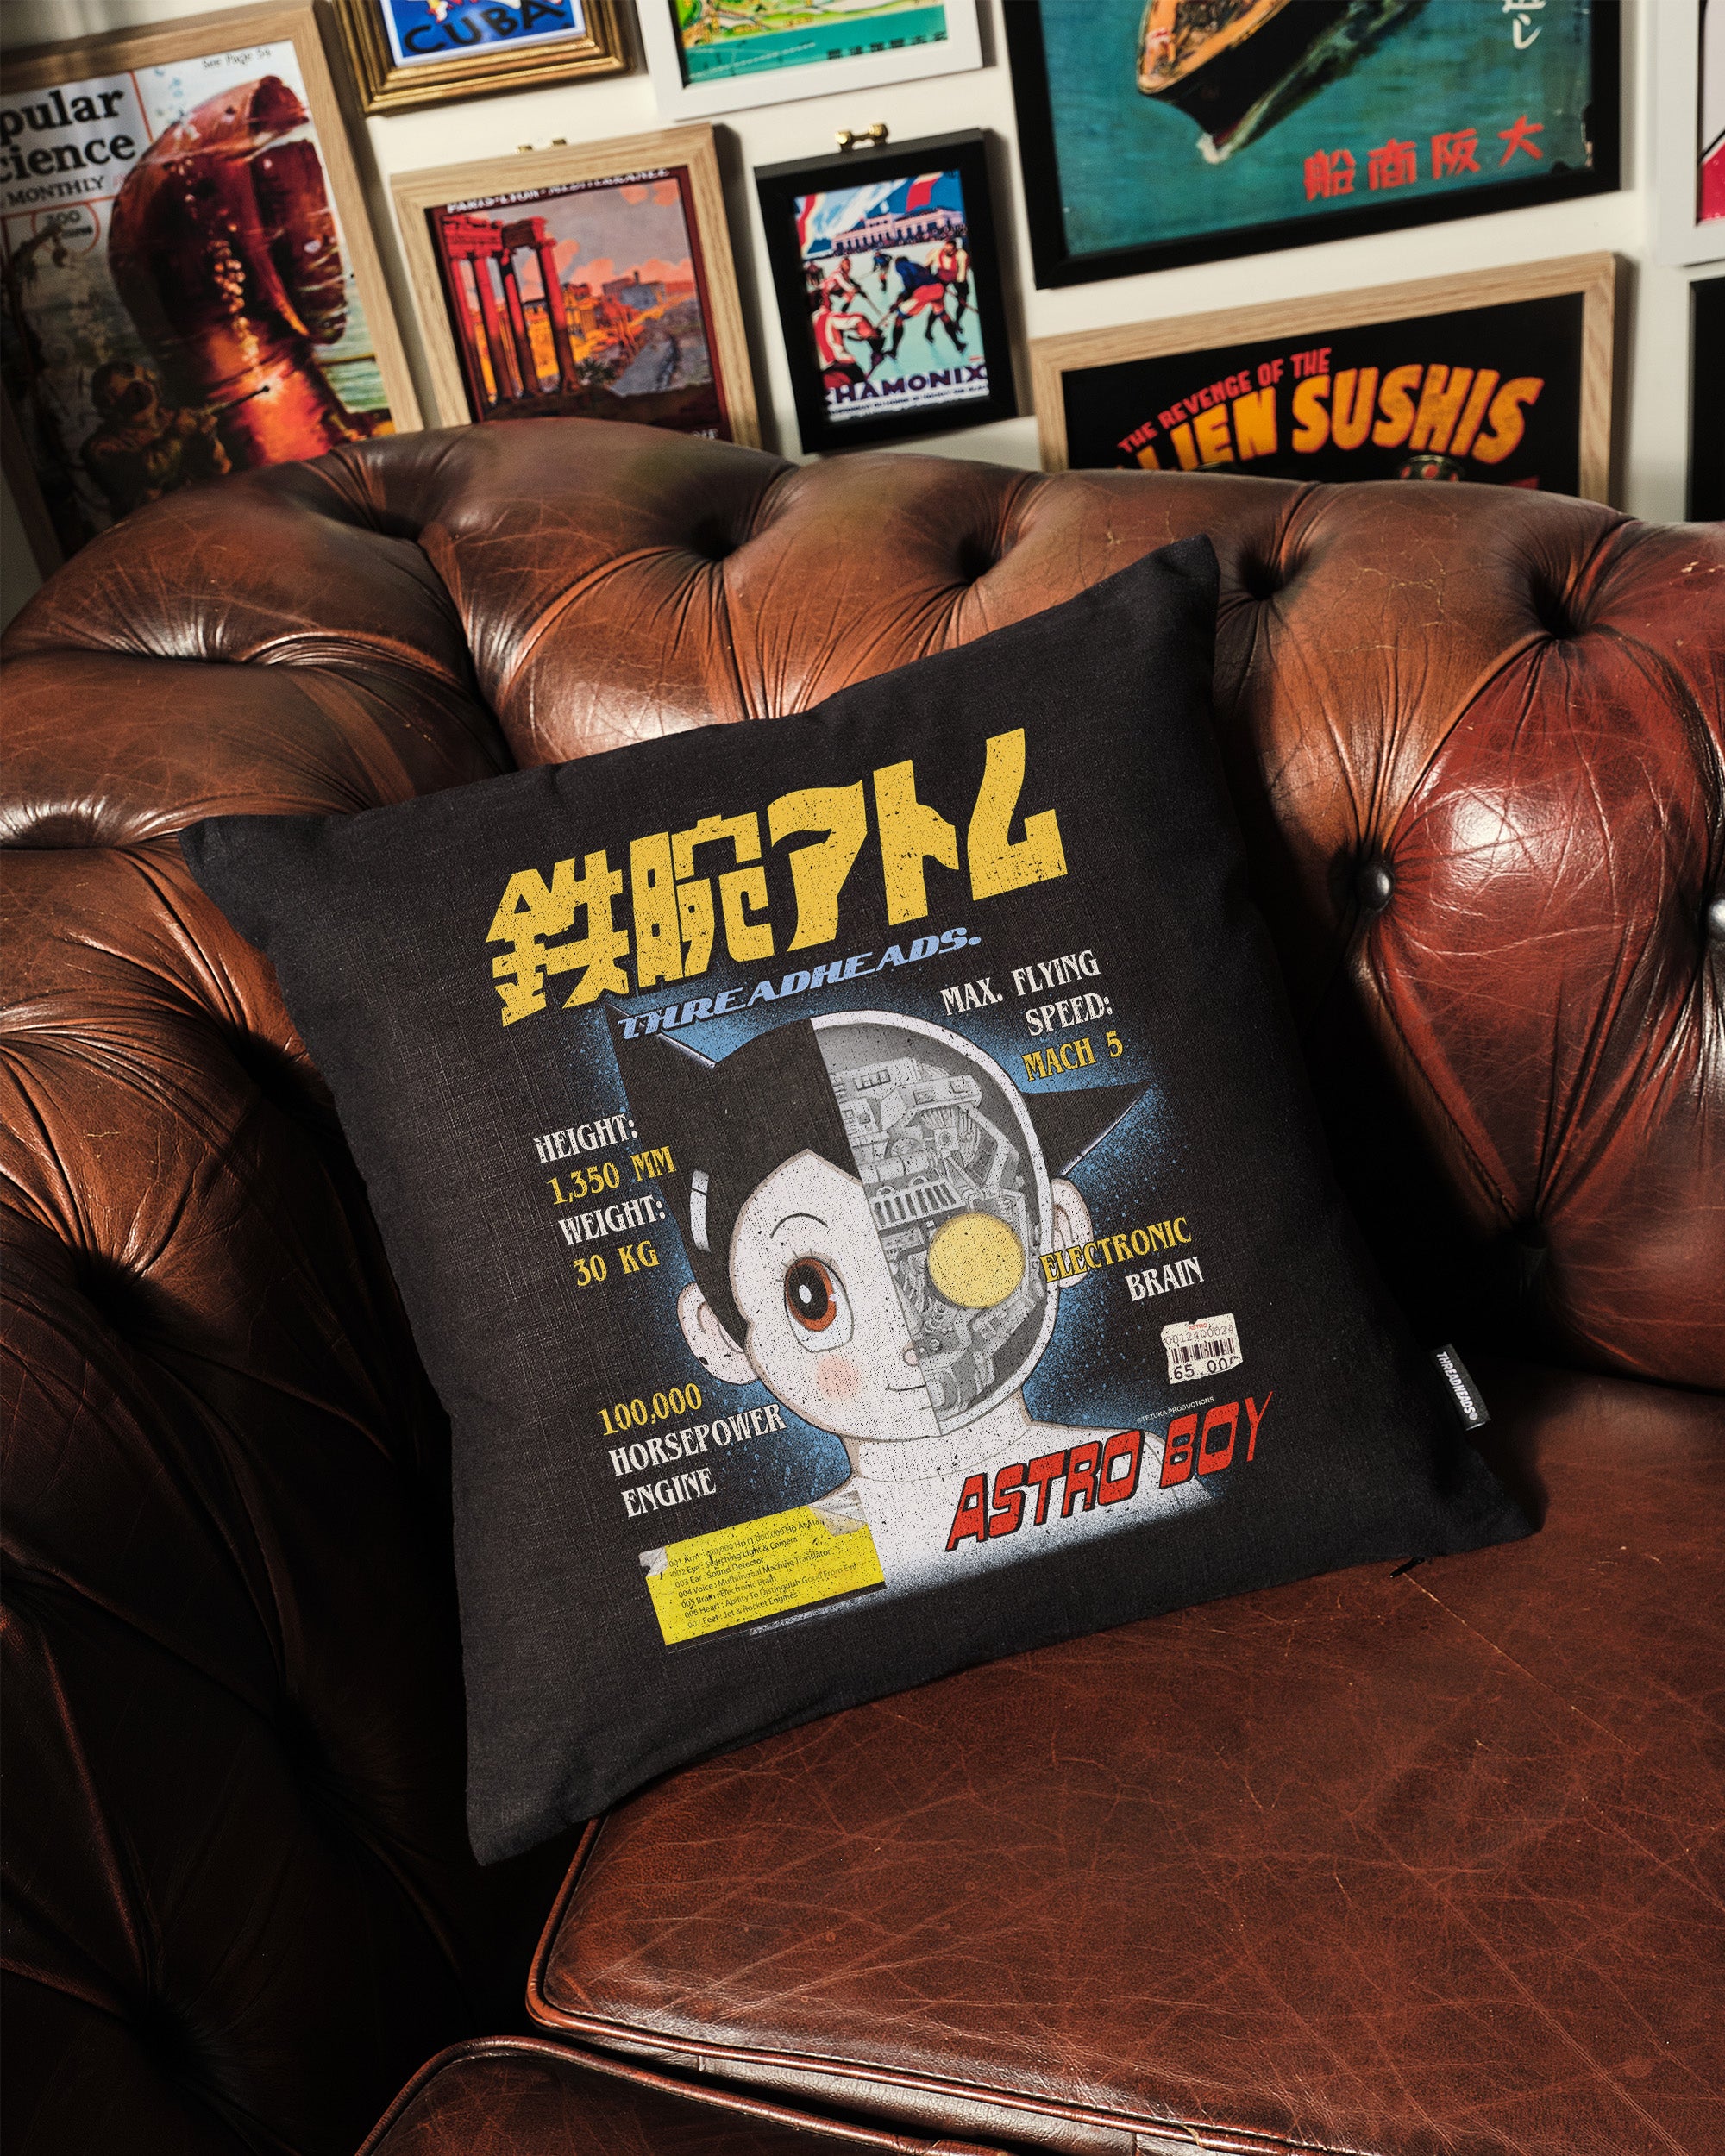 Astro Boy Magazine Cushion